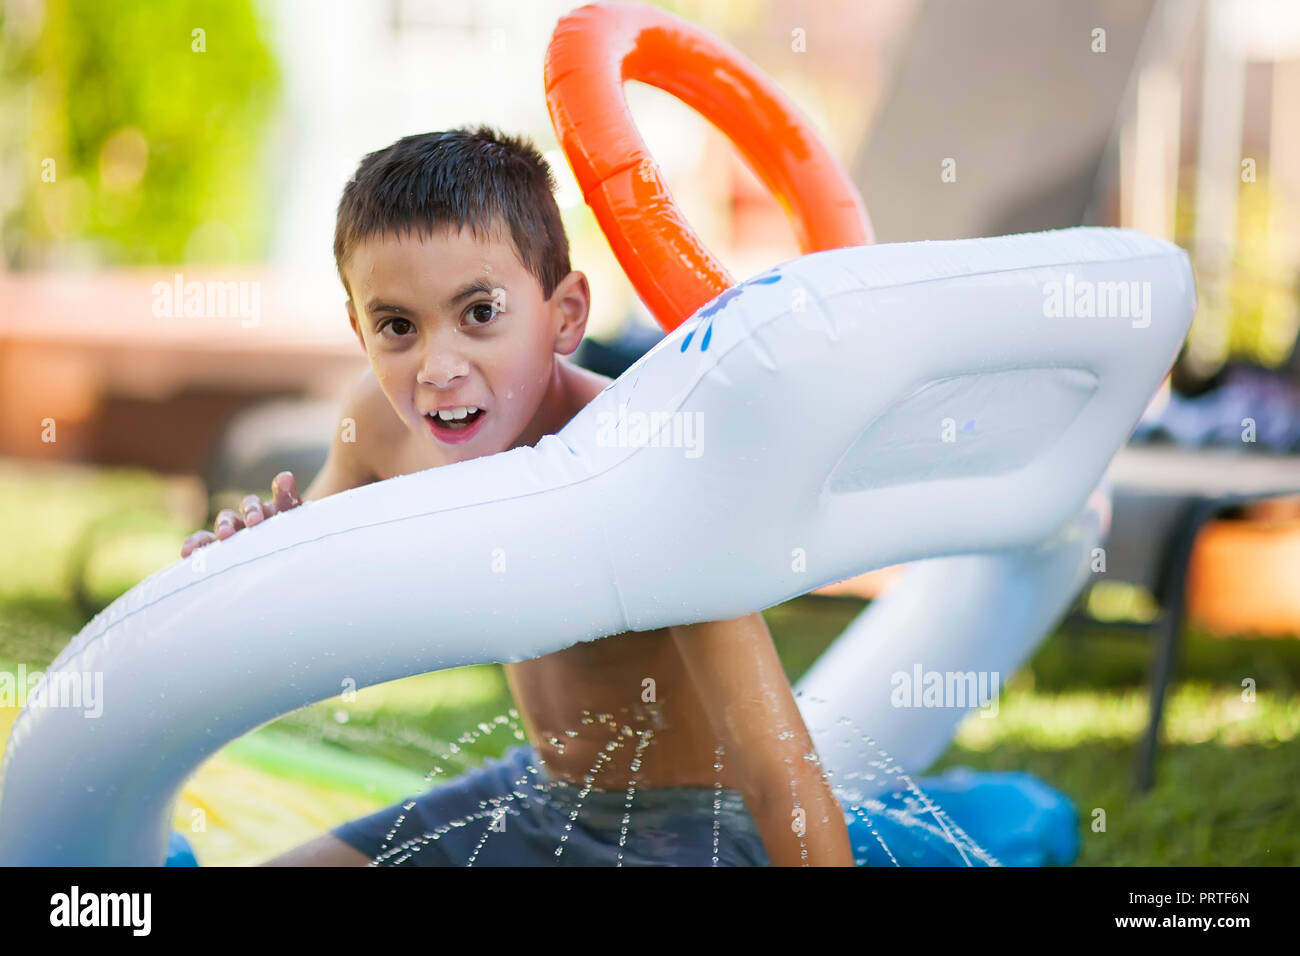 Boy splashing in a water slide having fun during summer in a backyard Stock Photo